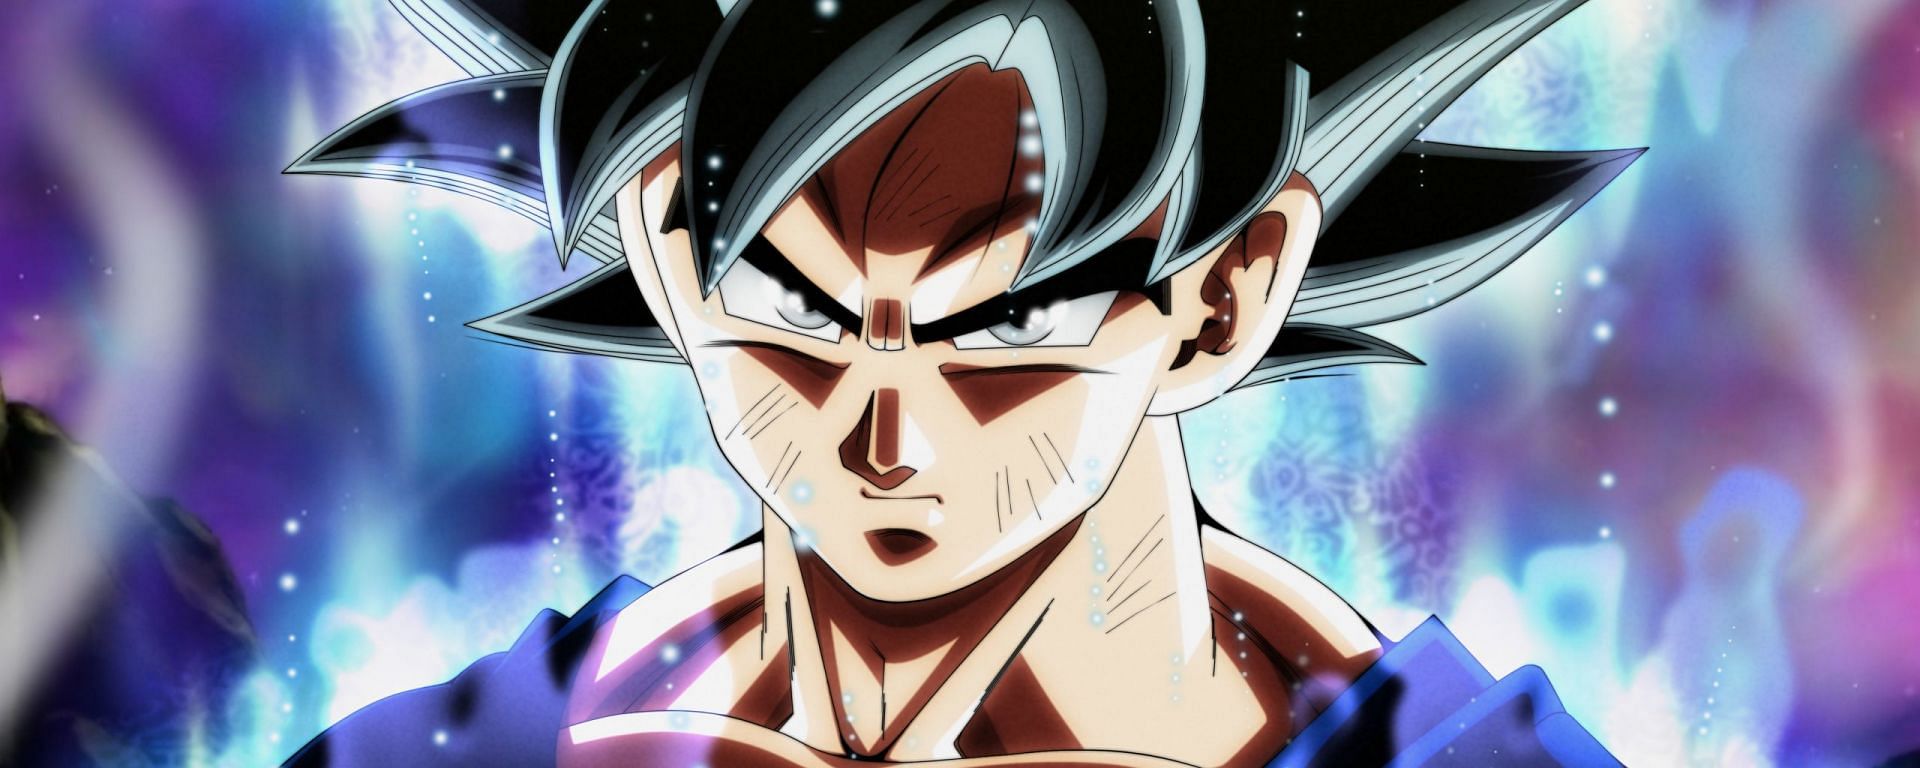 Goku vu dans Dragon Ball Super (Image via Toei Animation)